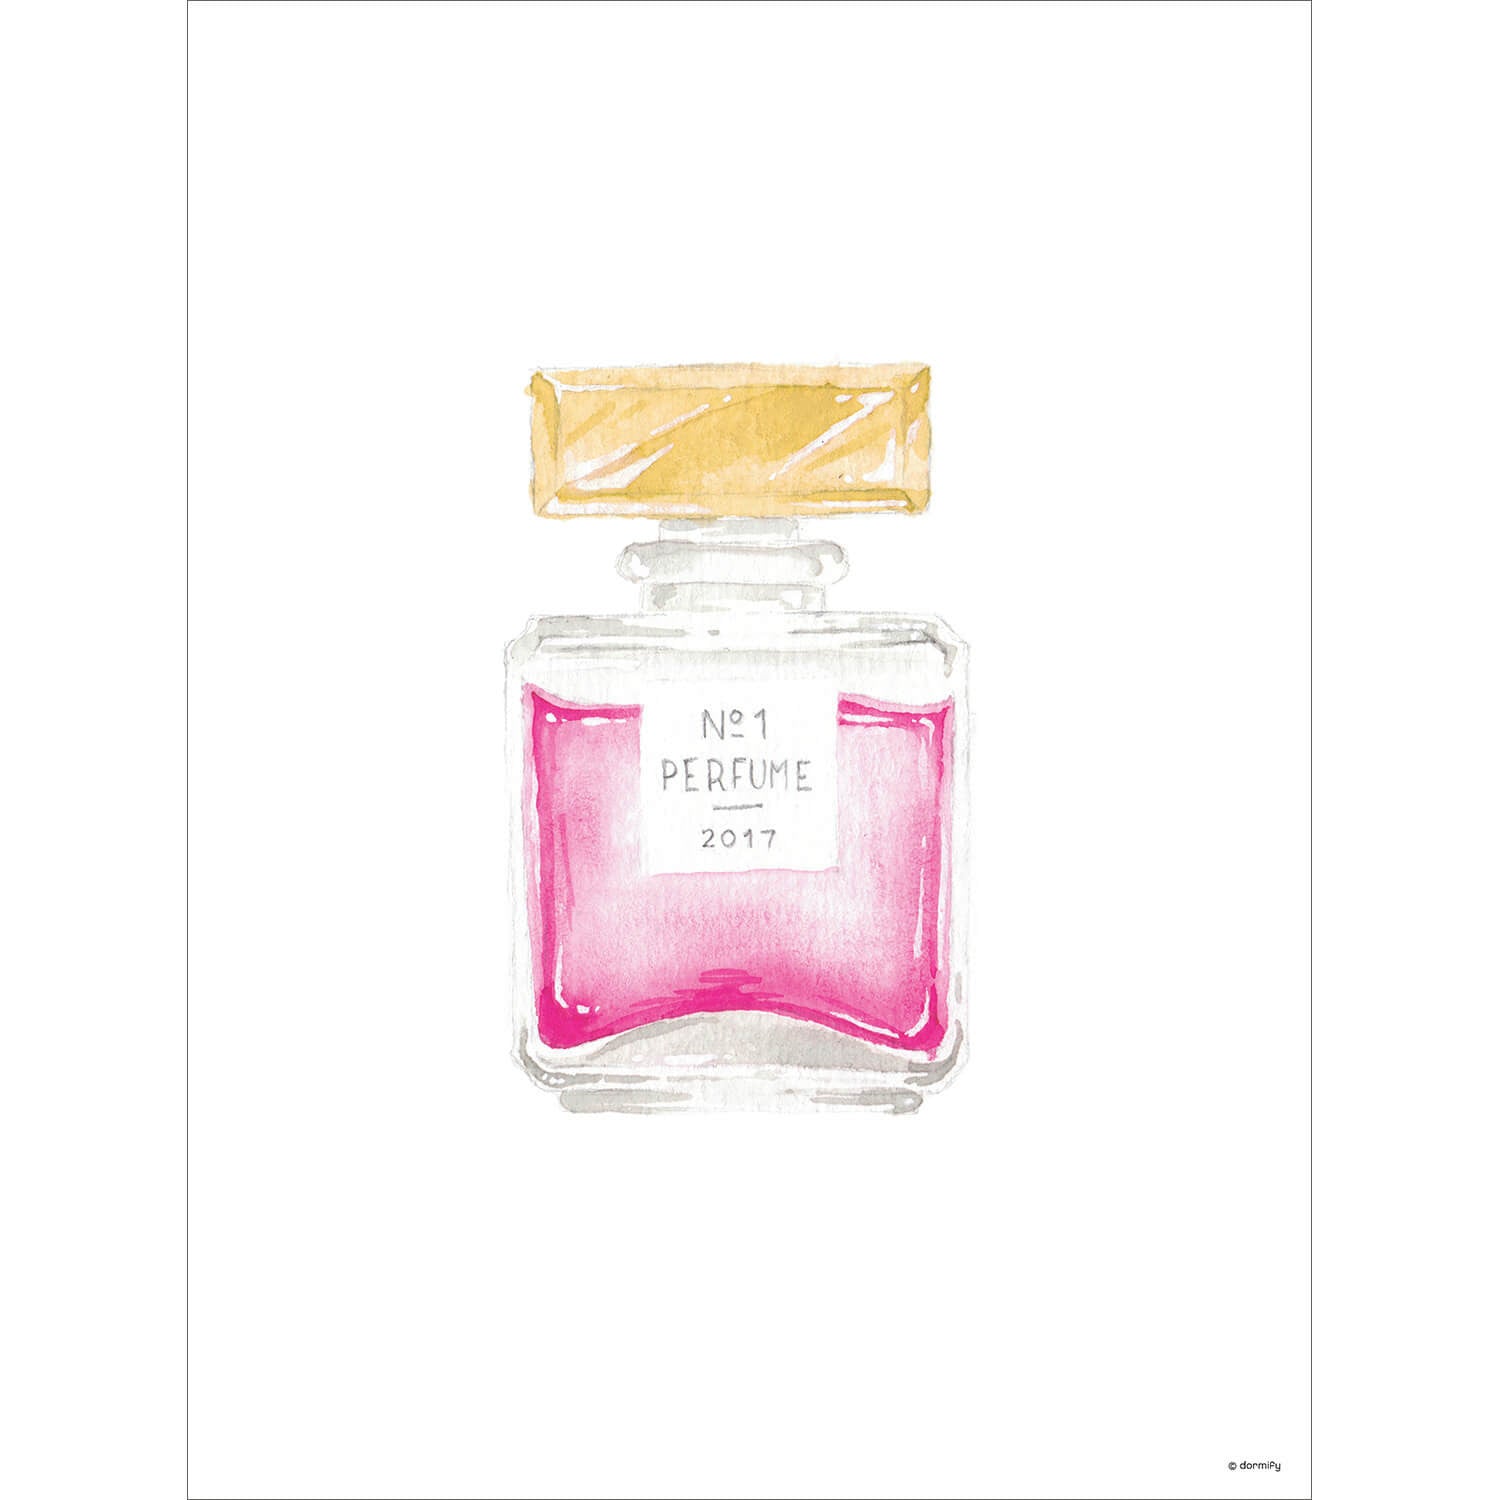 Log-On Perfume Bottle Print - Pink 16x20   Wall